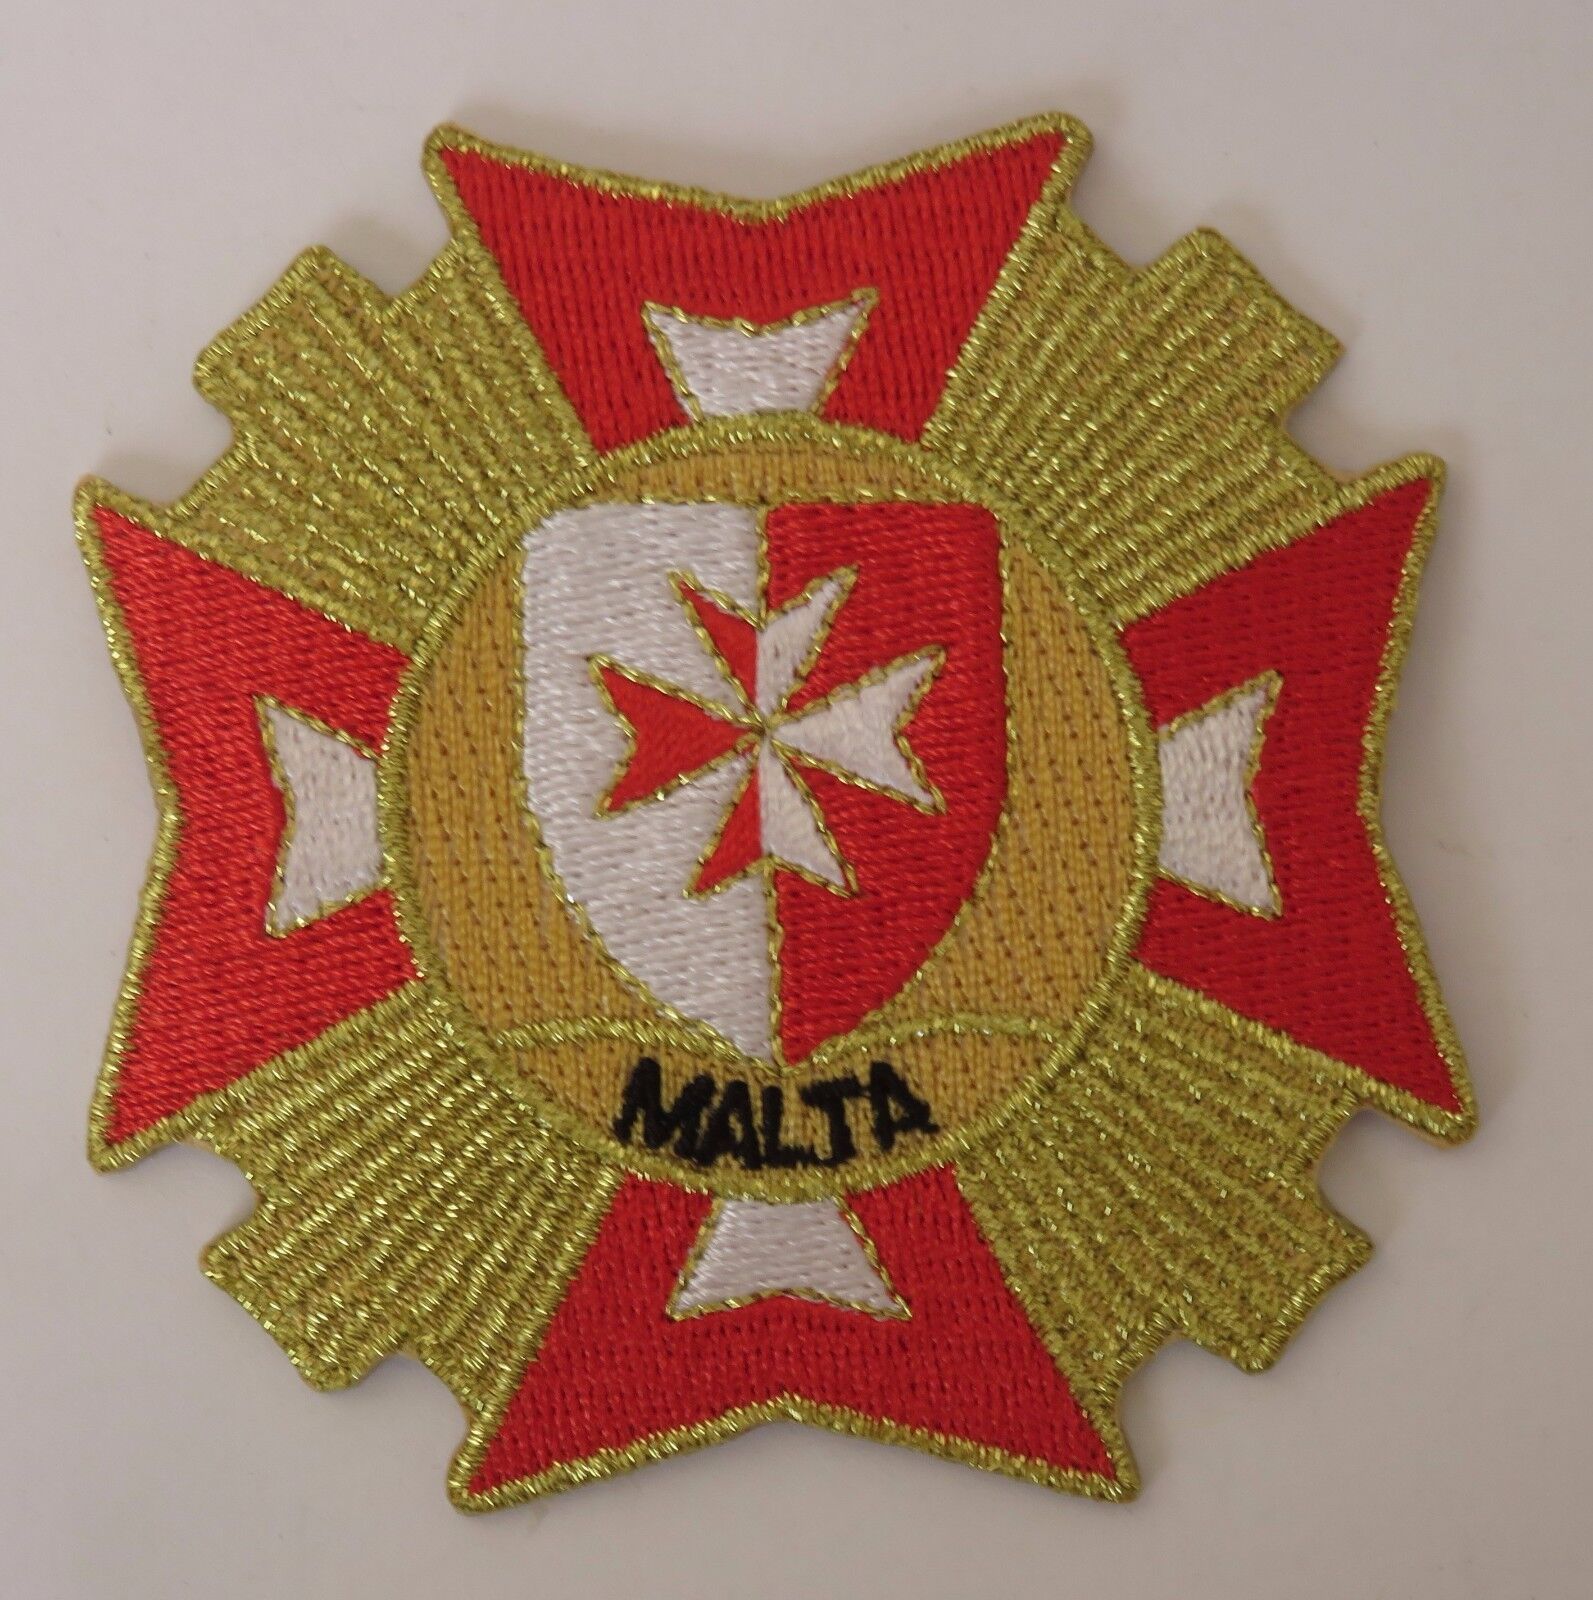  Knights Hospitaller St John Malta.   Patch/Badge  Red Cross in Gold Outline